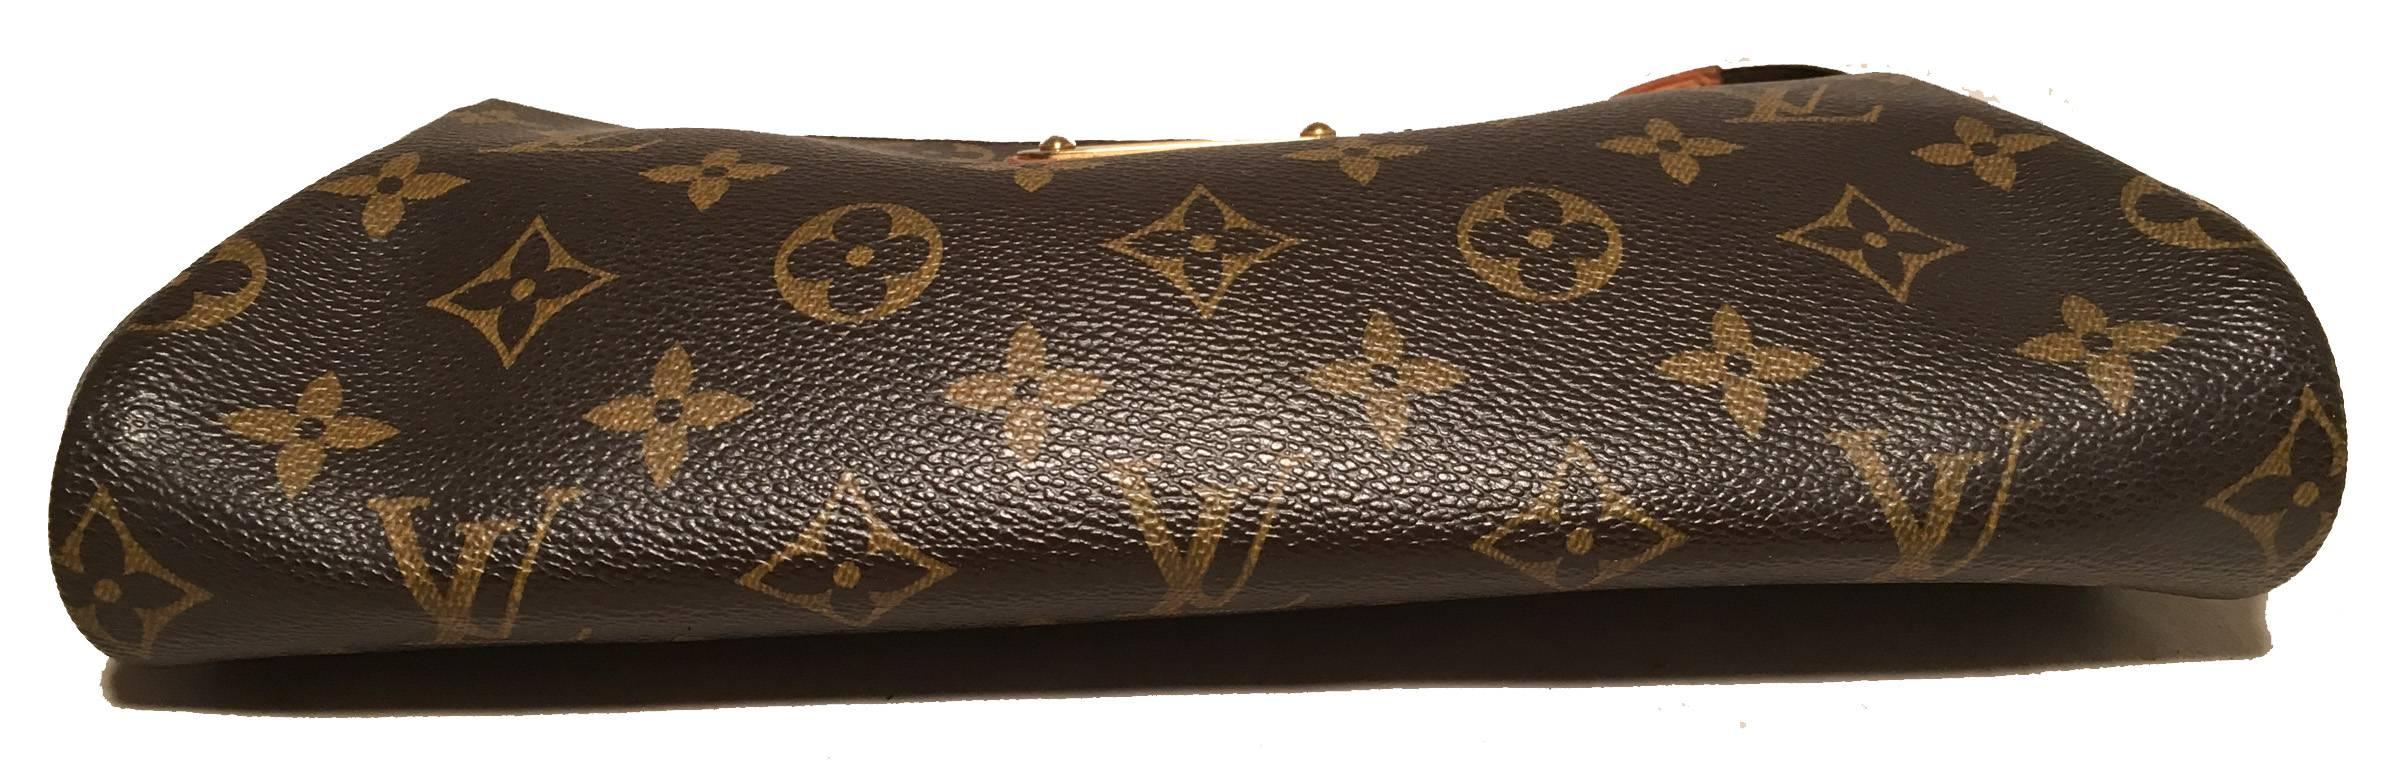 Louis Vuitton Monogram Eva Pouch Handbag Purse 2